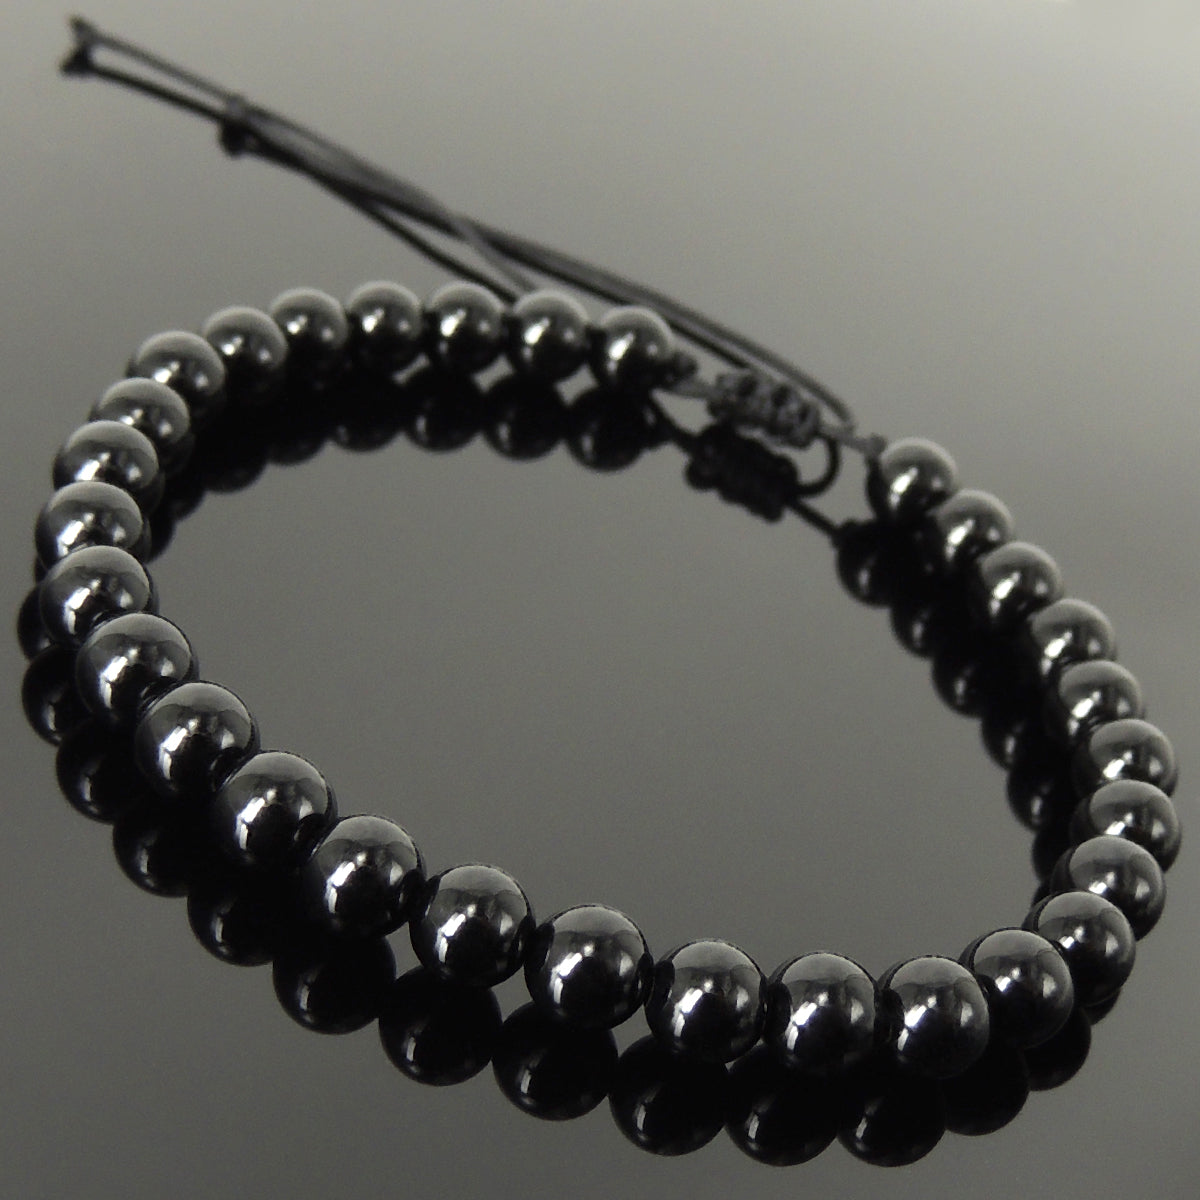 Handmade Braided Healing Gemstone Bracelet - 6mm Bright Black Onyx & Adjustable Drawstring BR1616